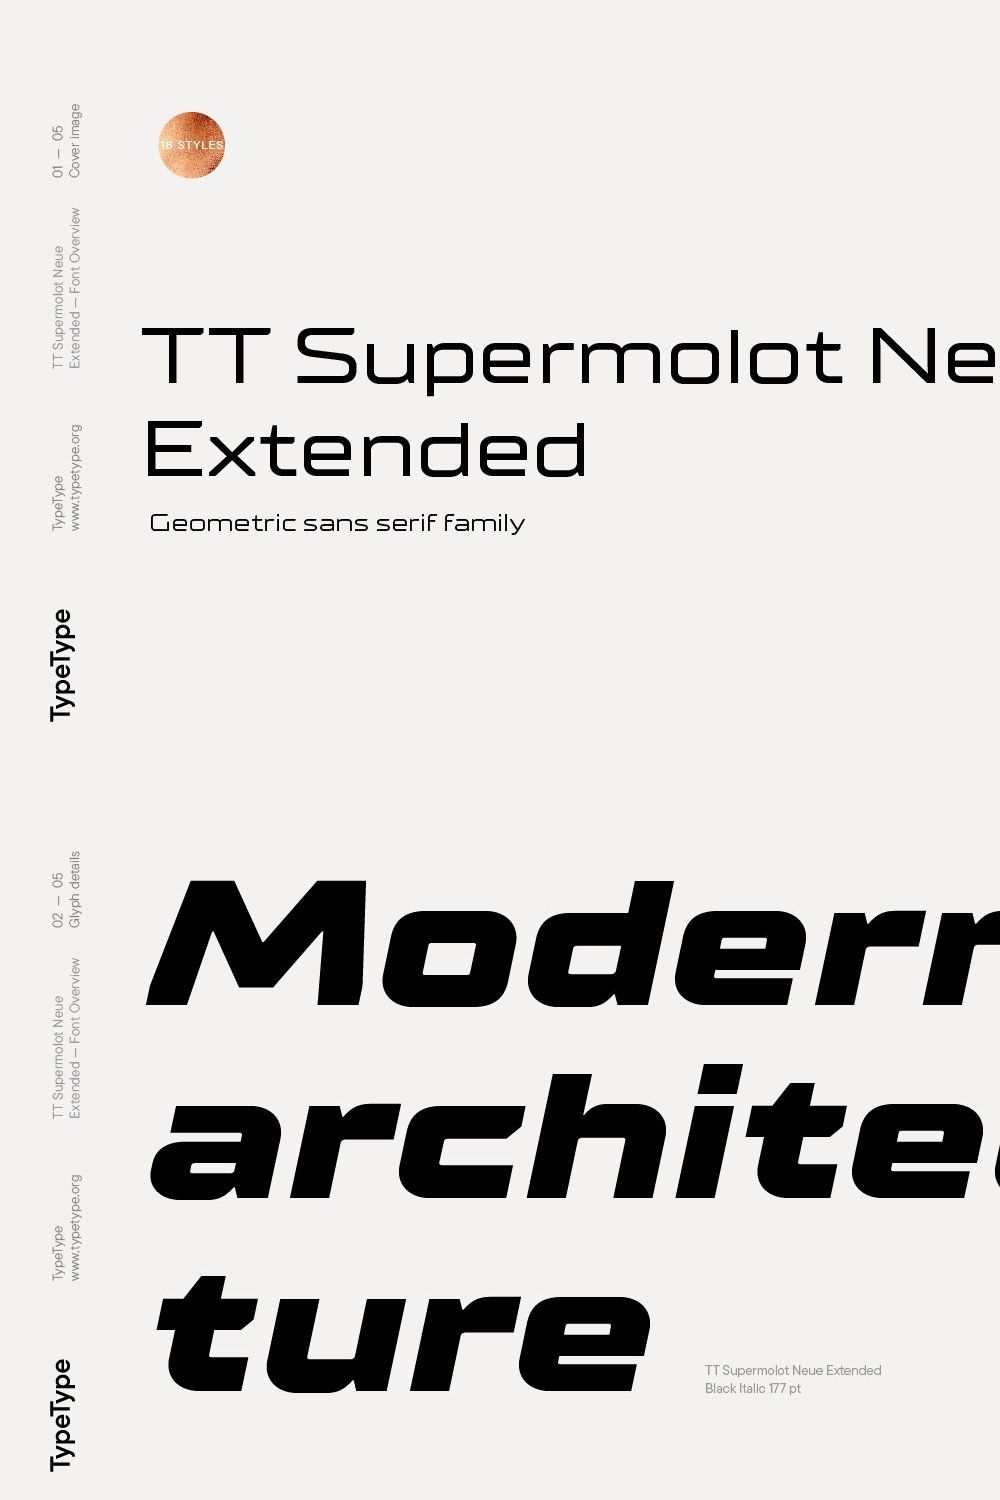 TT Supermolot Neue Extended pinterest preview image.